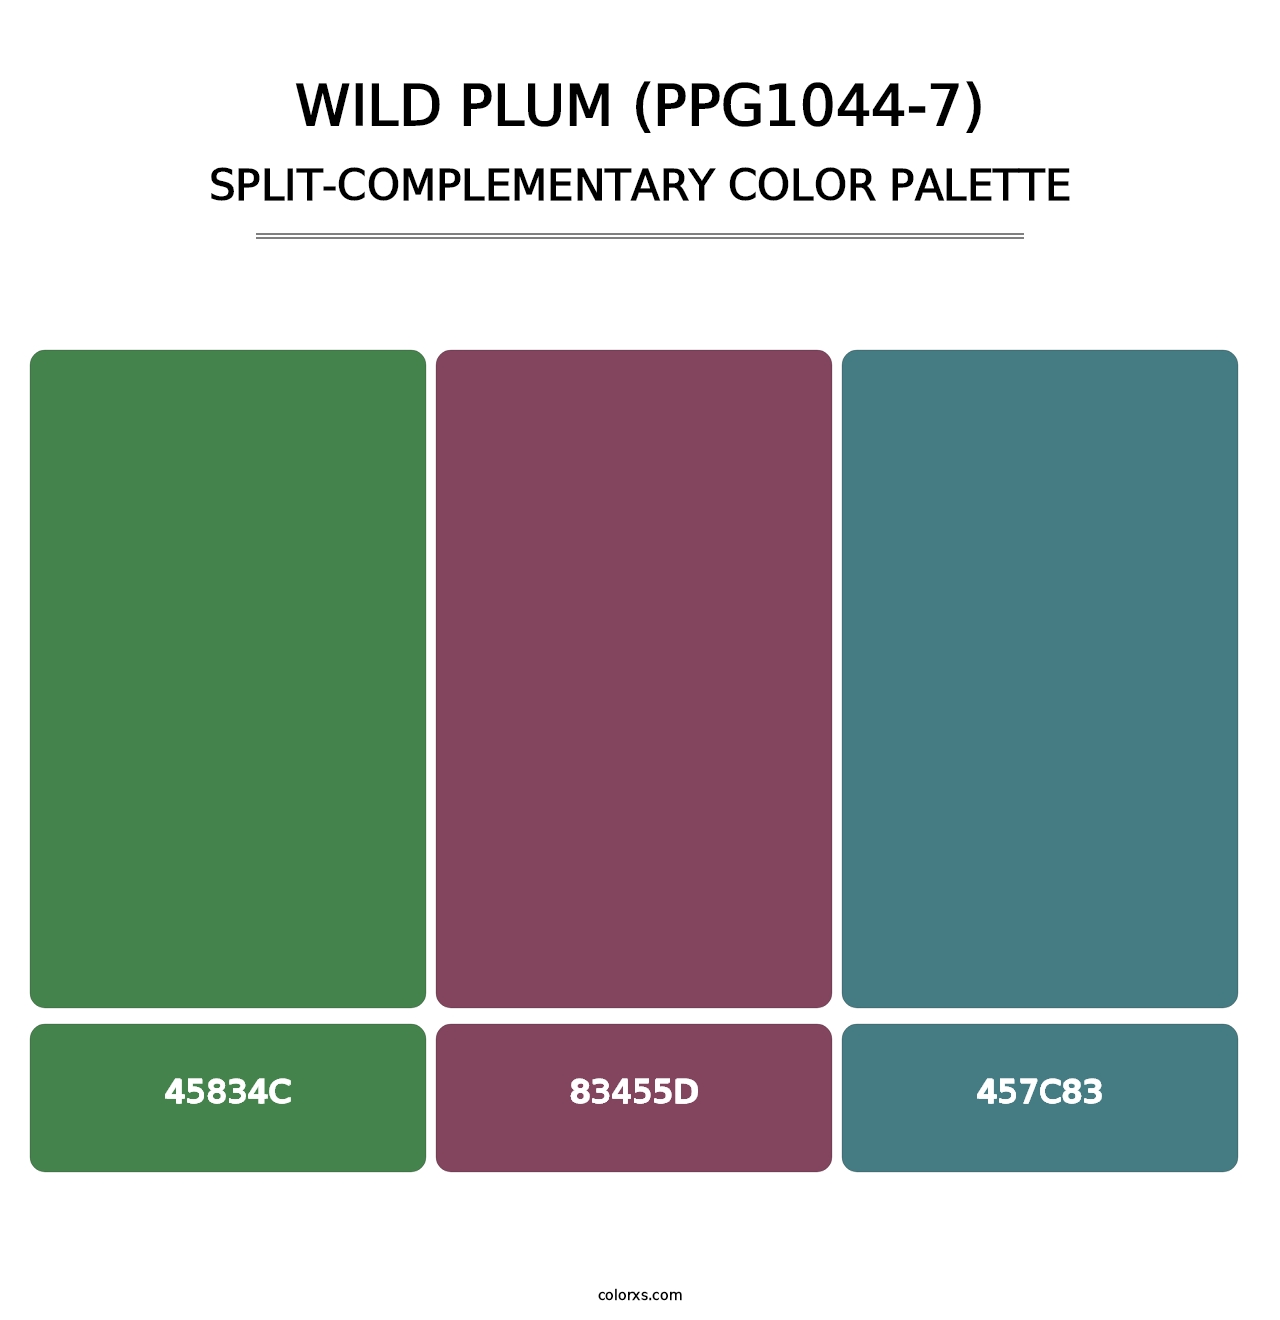 Wild Plum (PPG1044-7) - Split-Complementary Color Palette